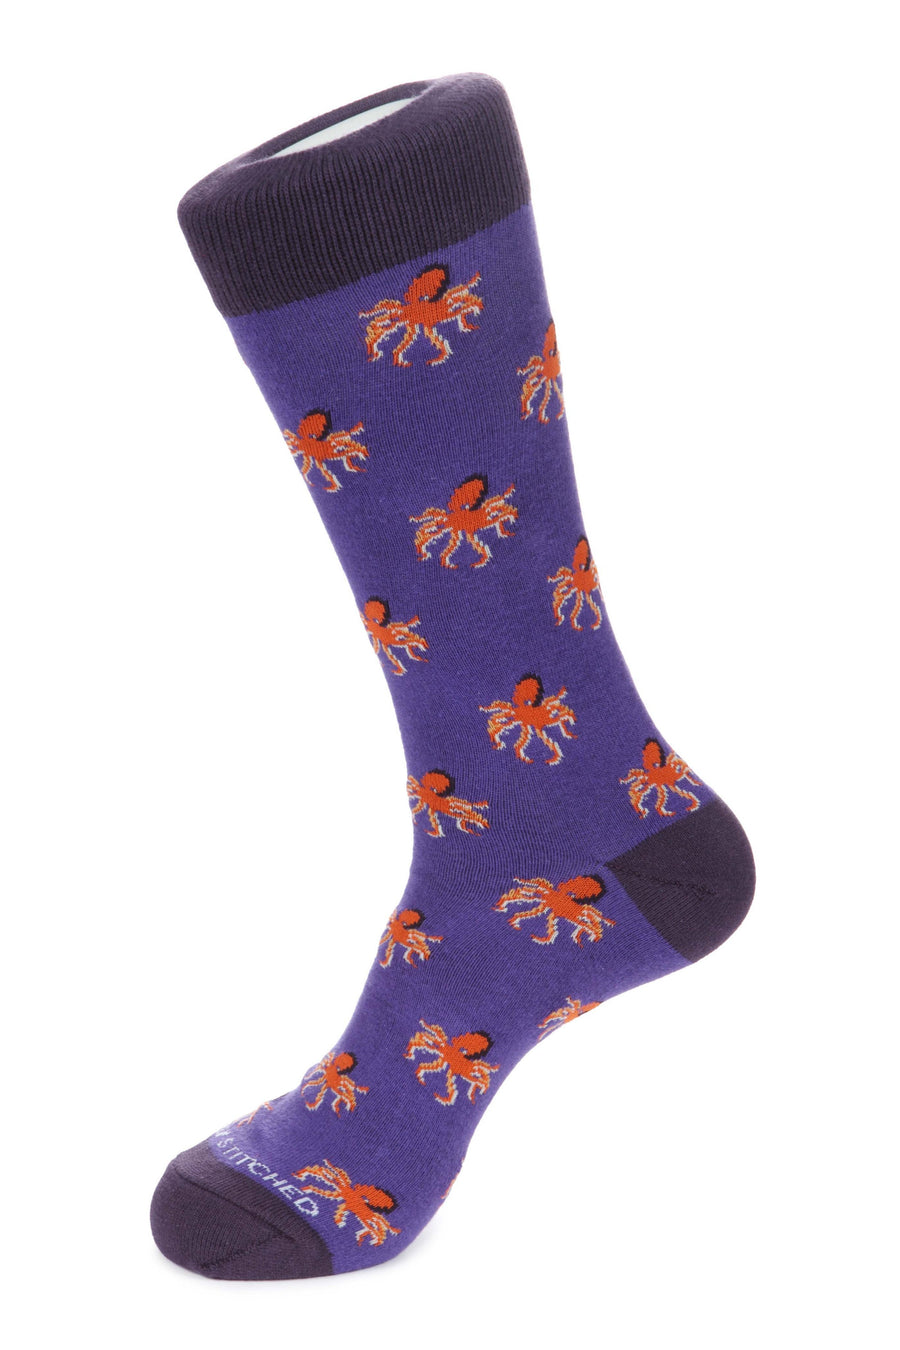 Octopus Sock